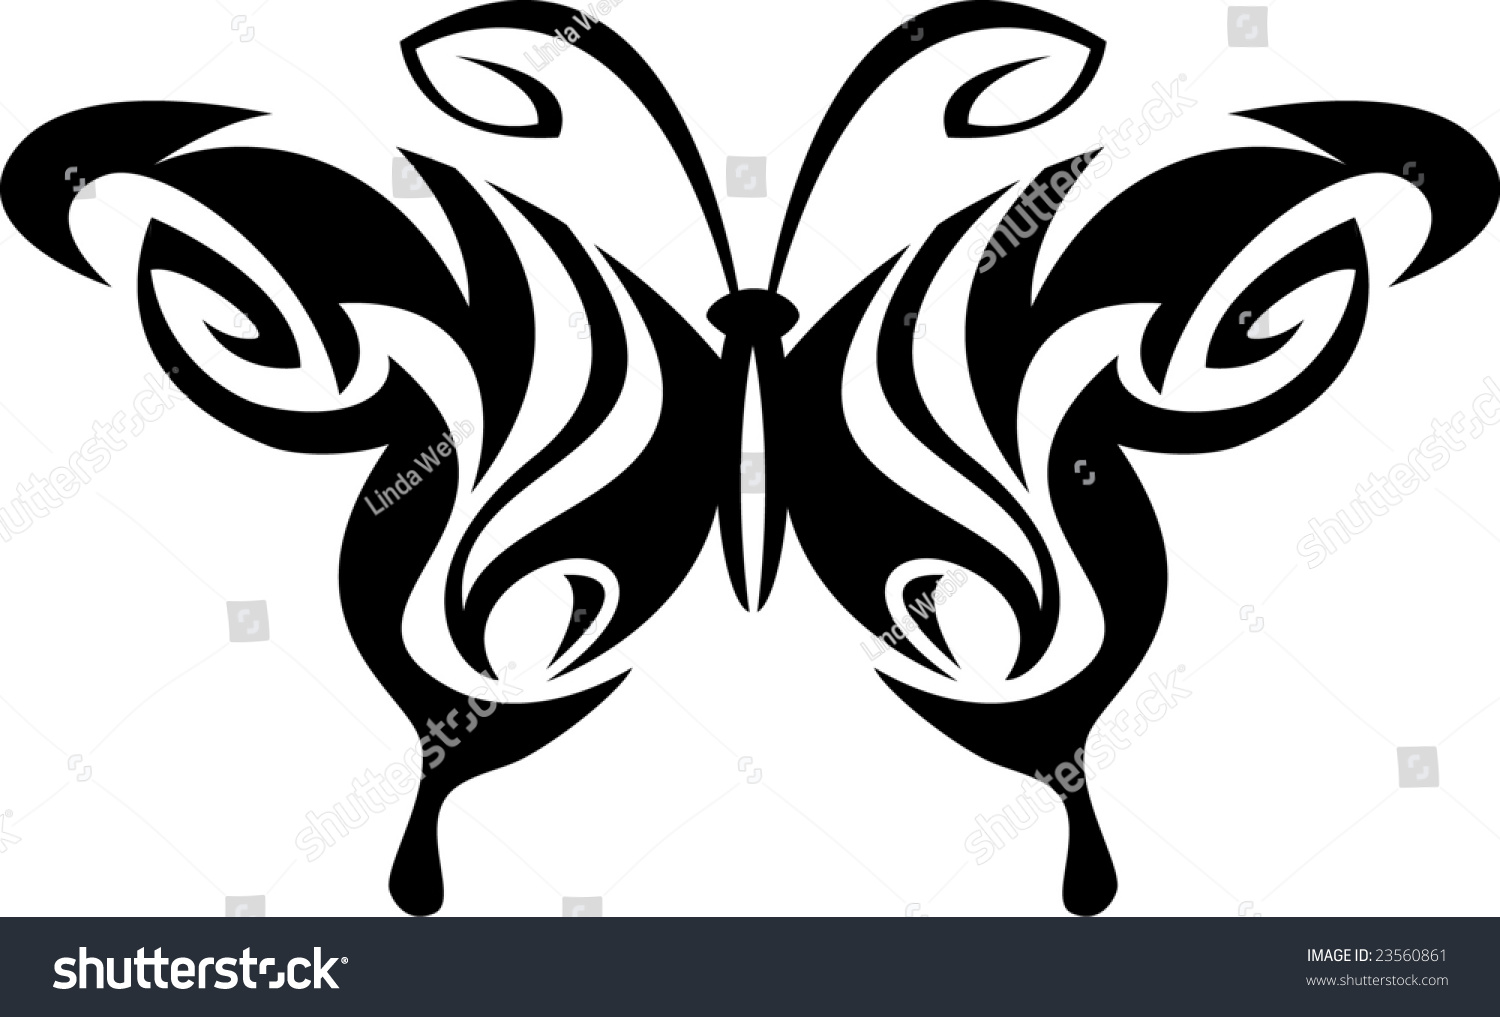 Tribal Butterfly Tattoo Design Stock Illustration 23560861 - Shutterstock